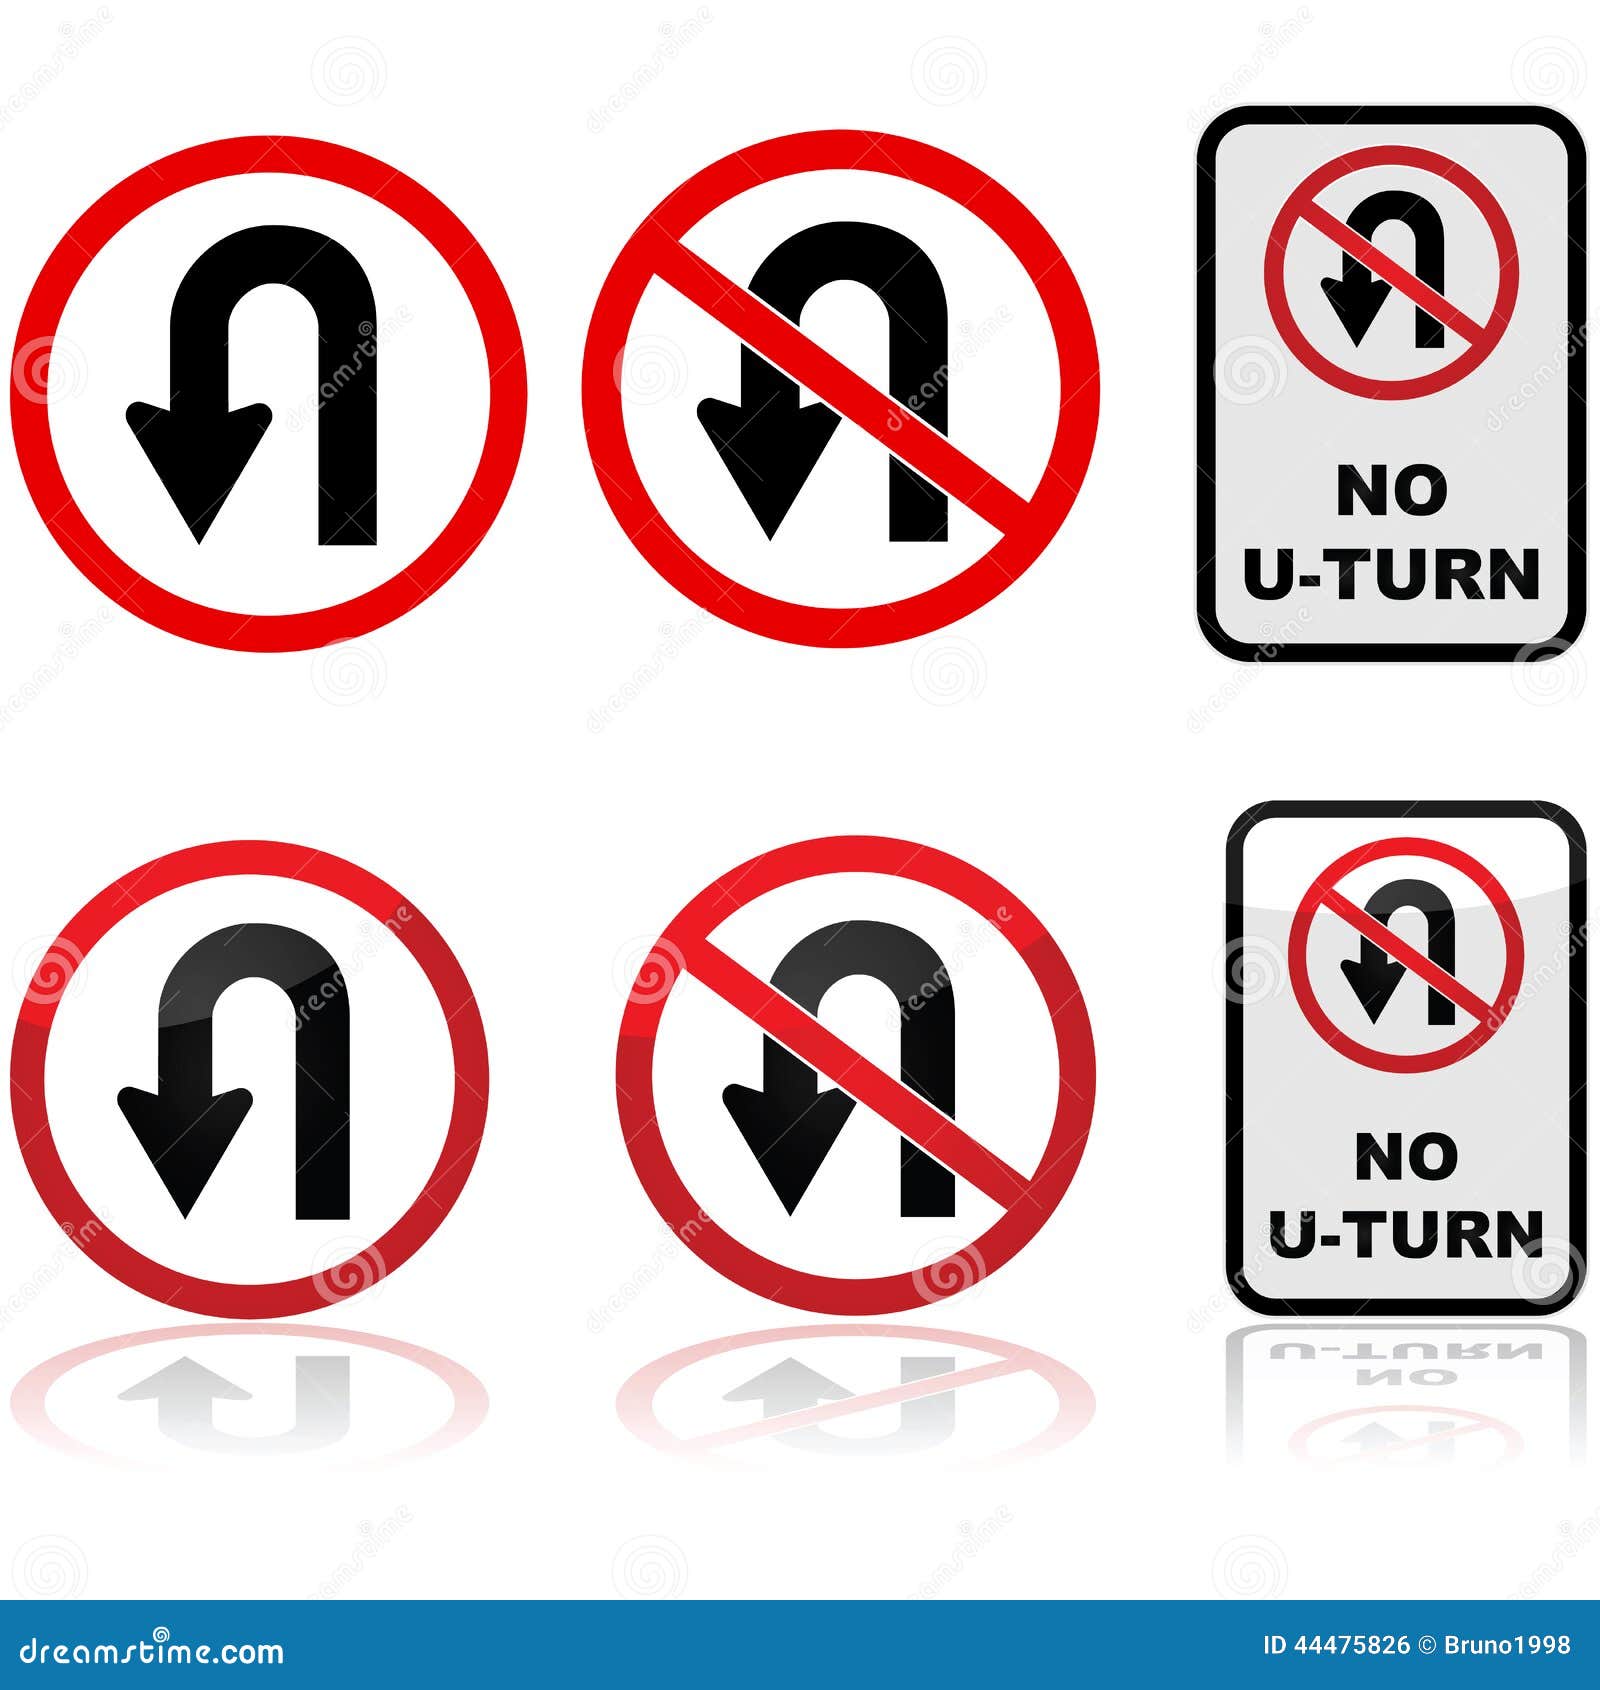 u-turn signs